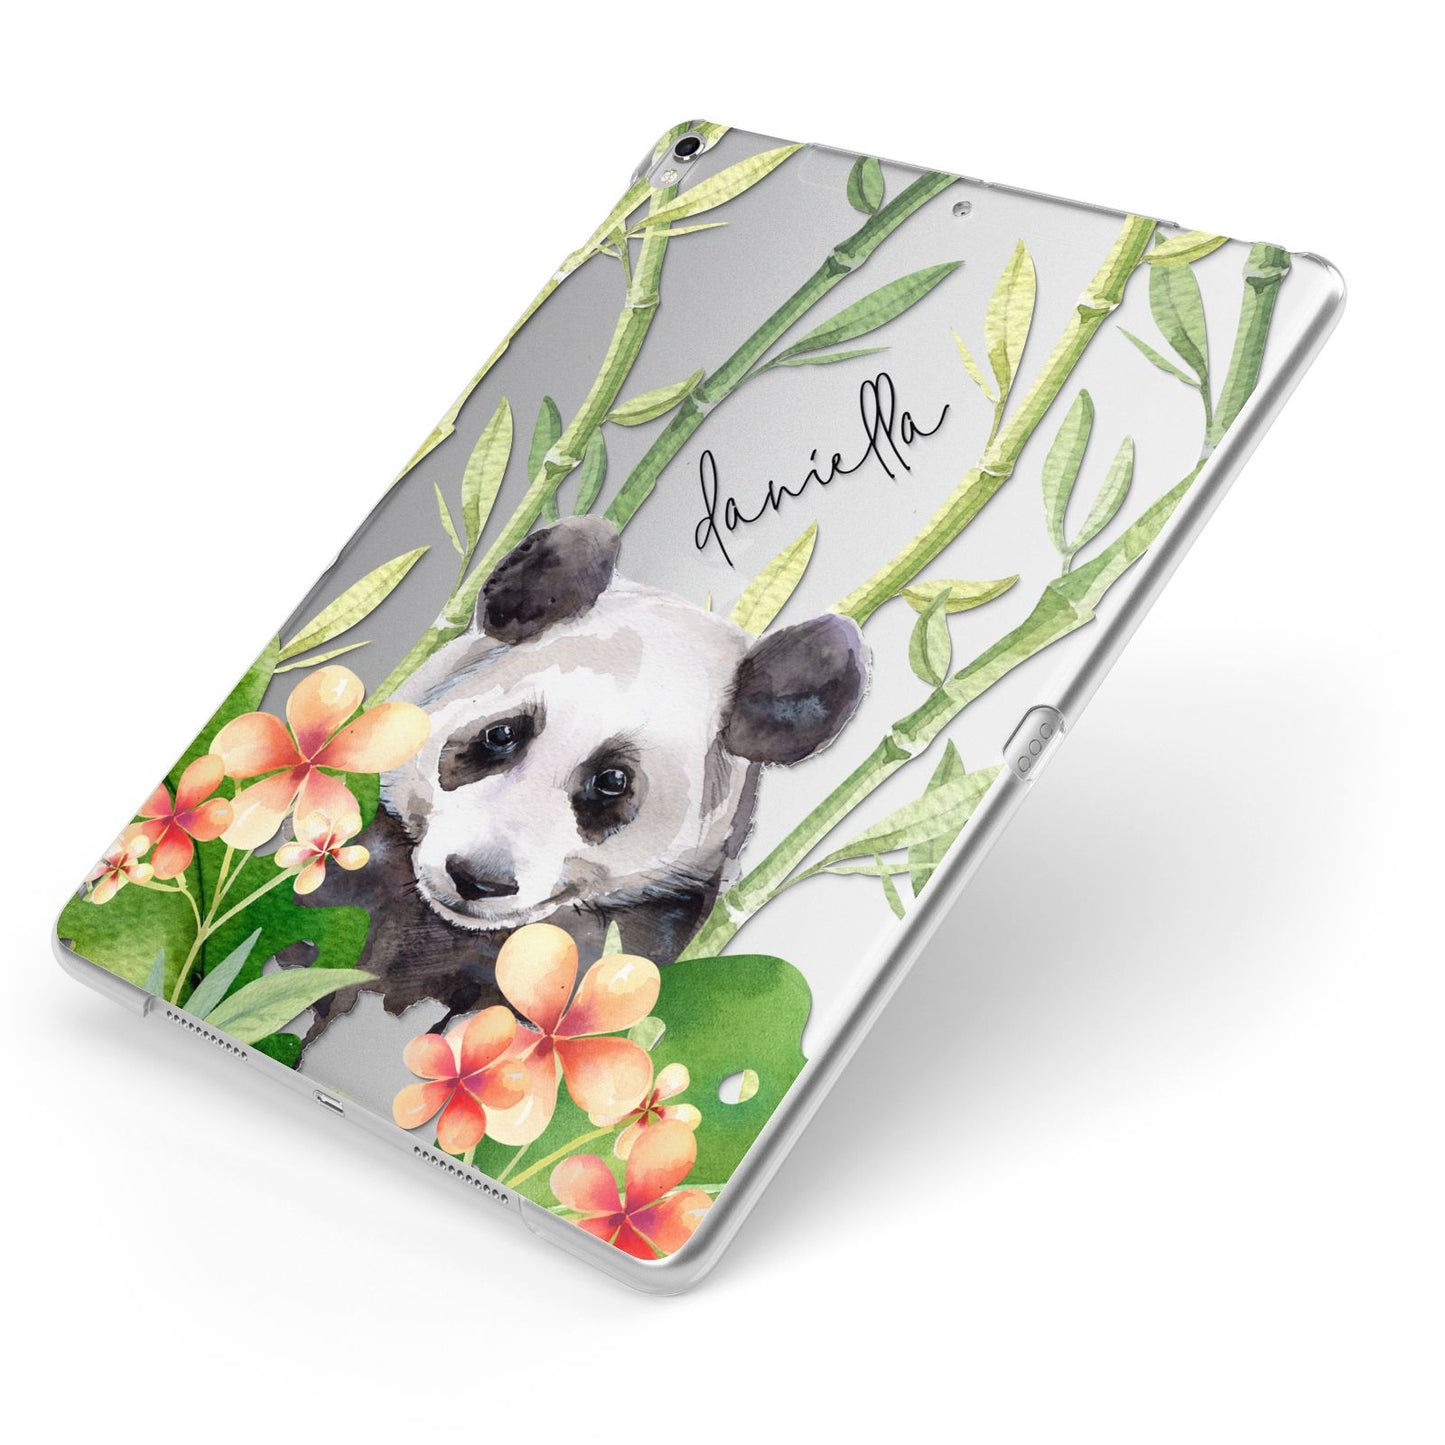 Personalised Panda Apple iPad Case on Silver iPad Side View